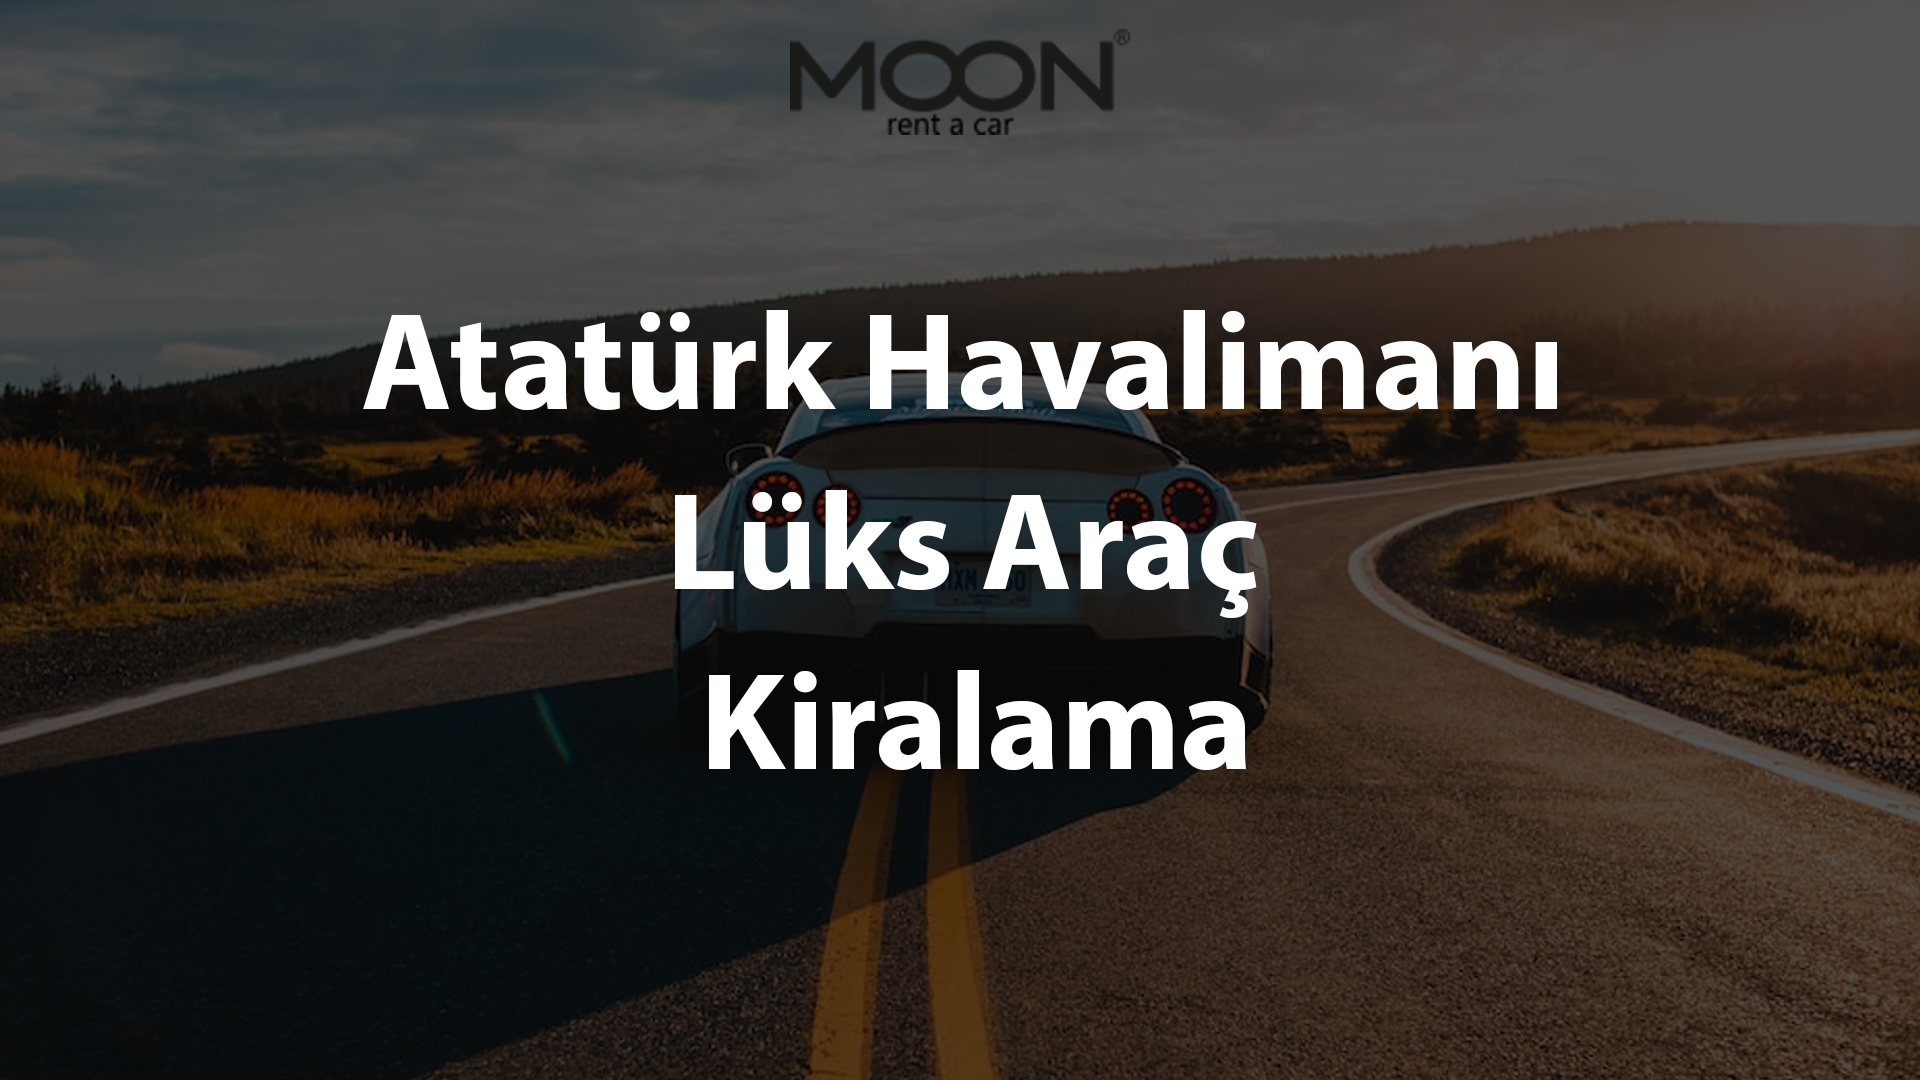 Ataturk Airport Luxury Car Rental